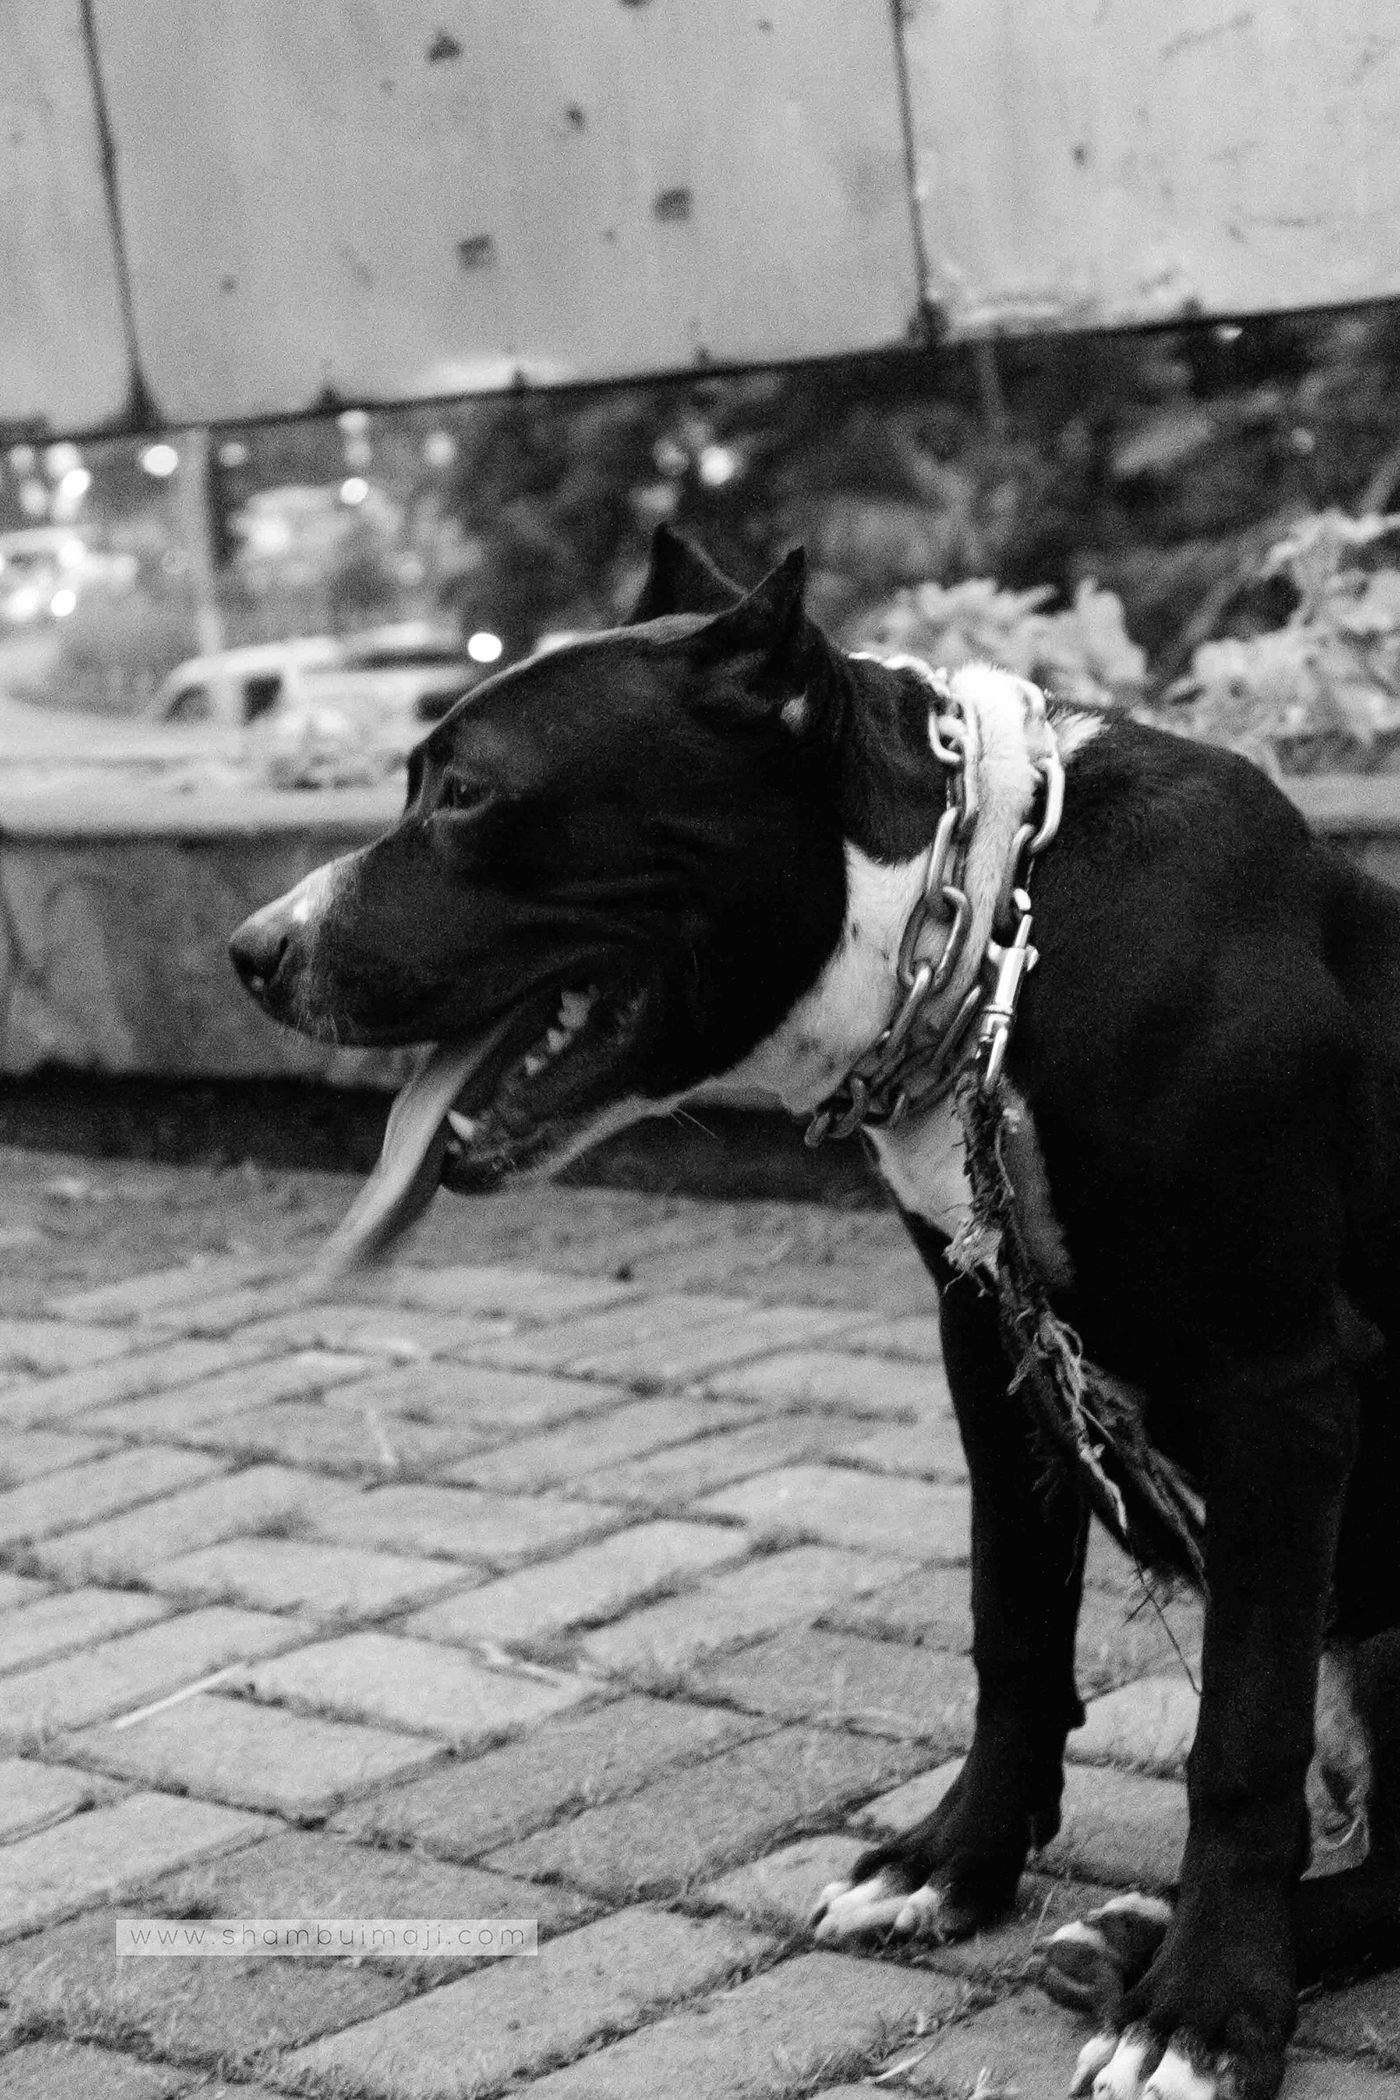 anjing Bogor animal photography street photography photojournalism  Photography  Canon